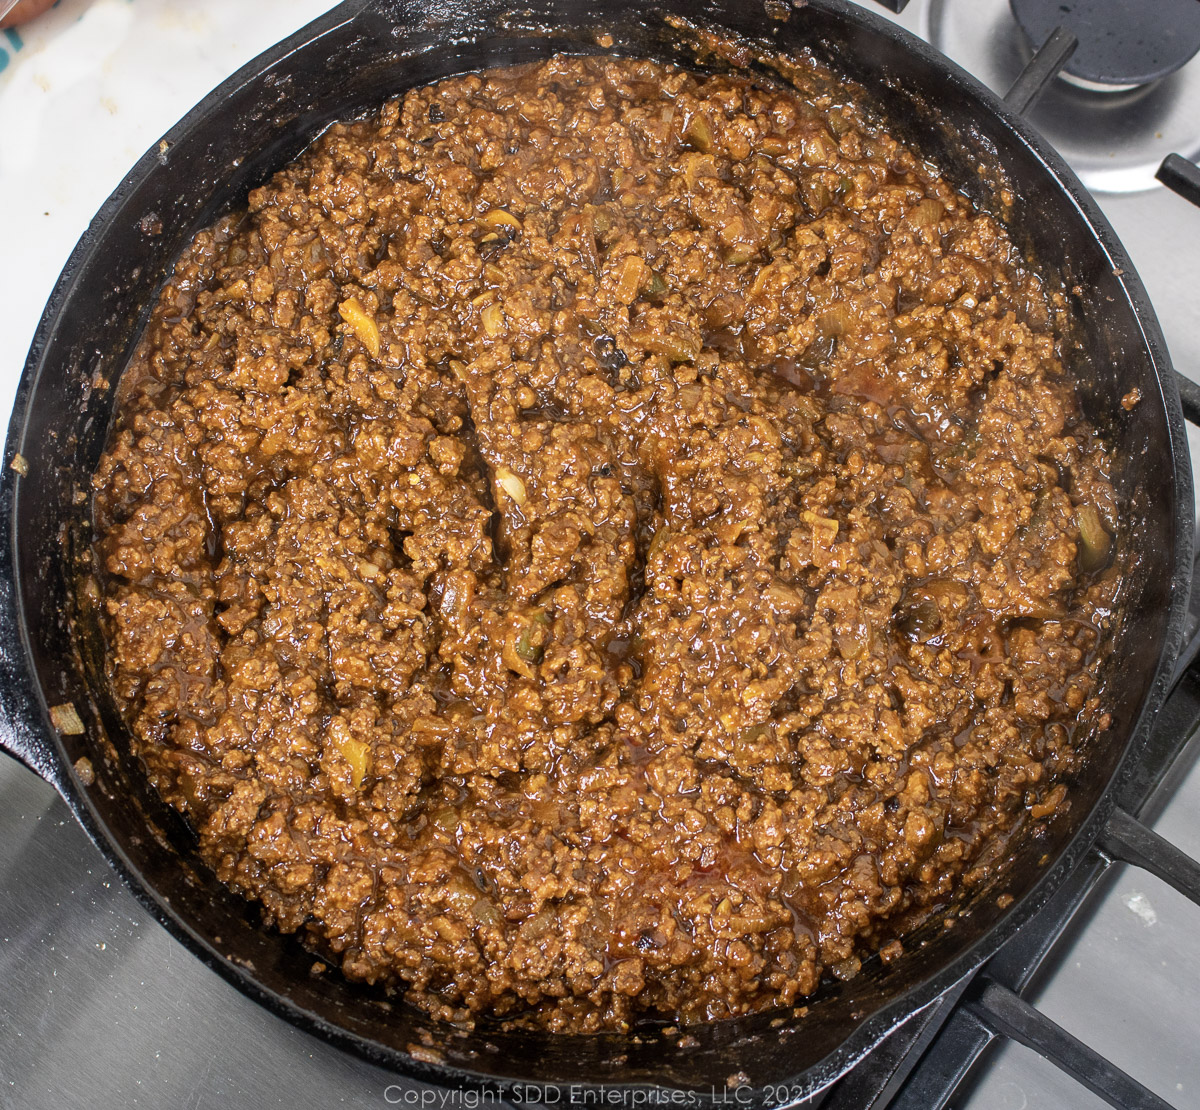 Sloppy Joe mixture simmering in a cast iron pan